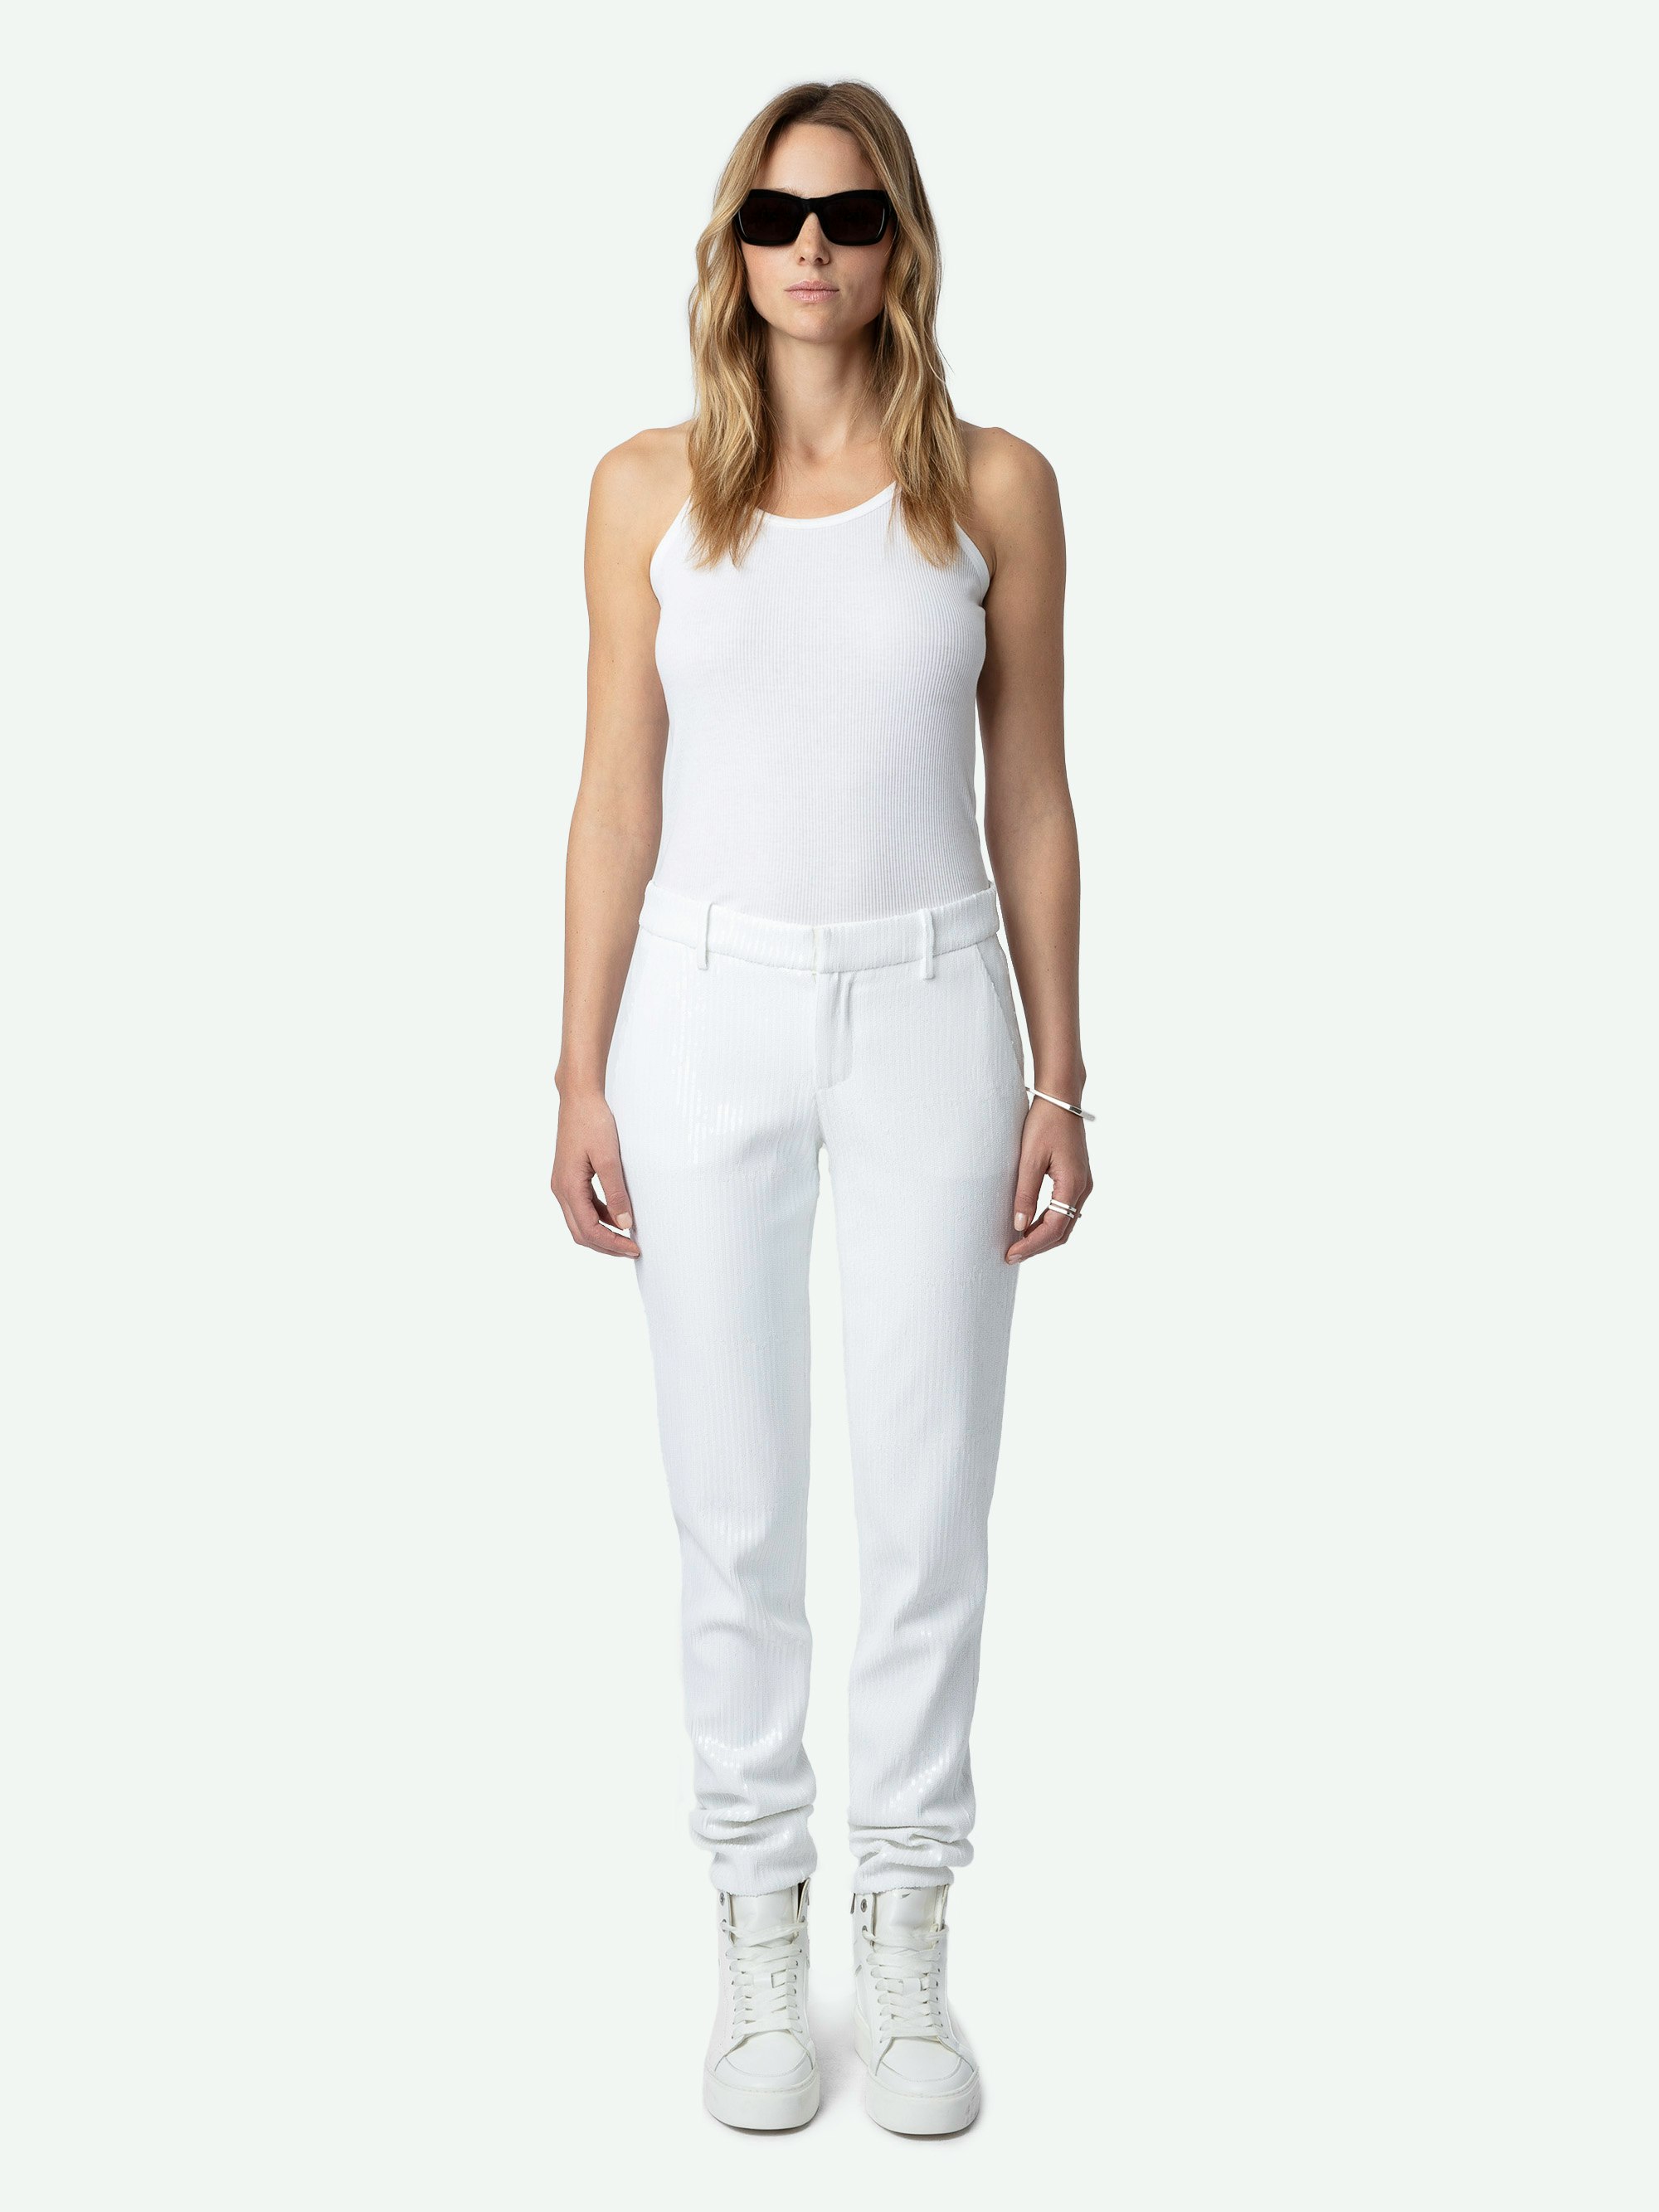 Pantaloni Prune Lustrini - Pantaloni sartoriali bianchi dritti con paillettes e tasche.